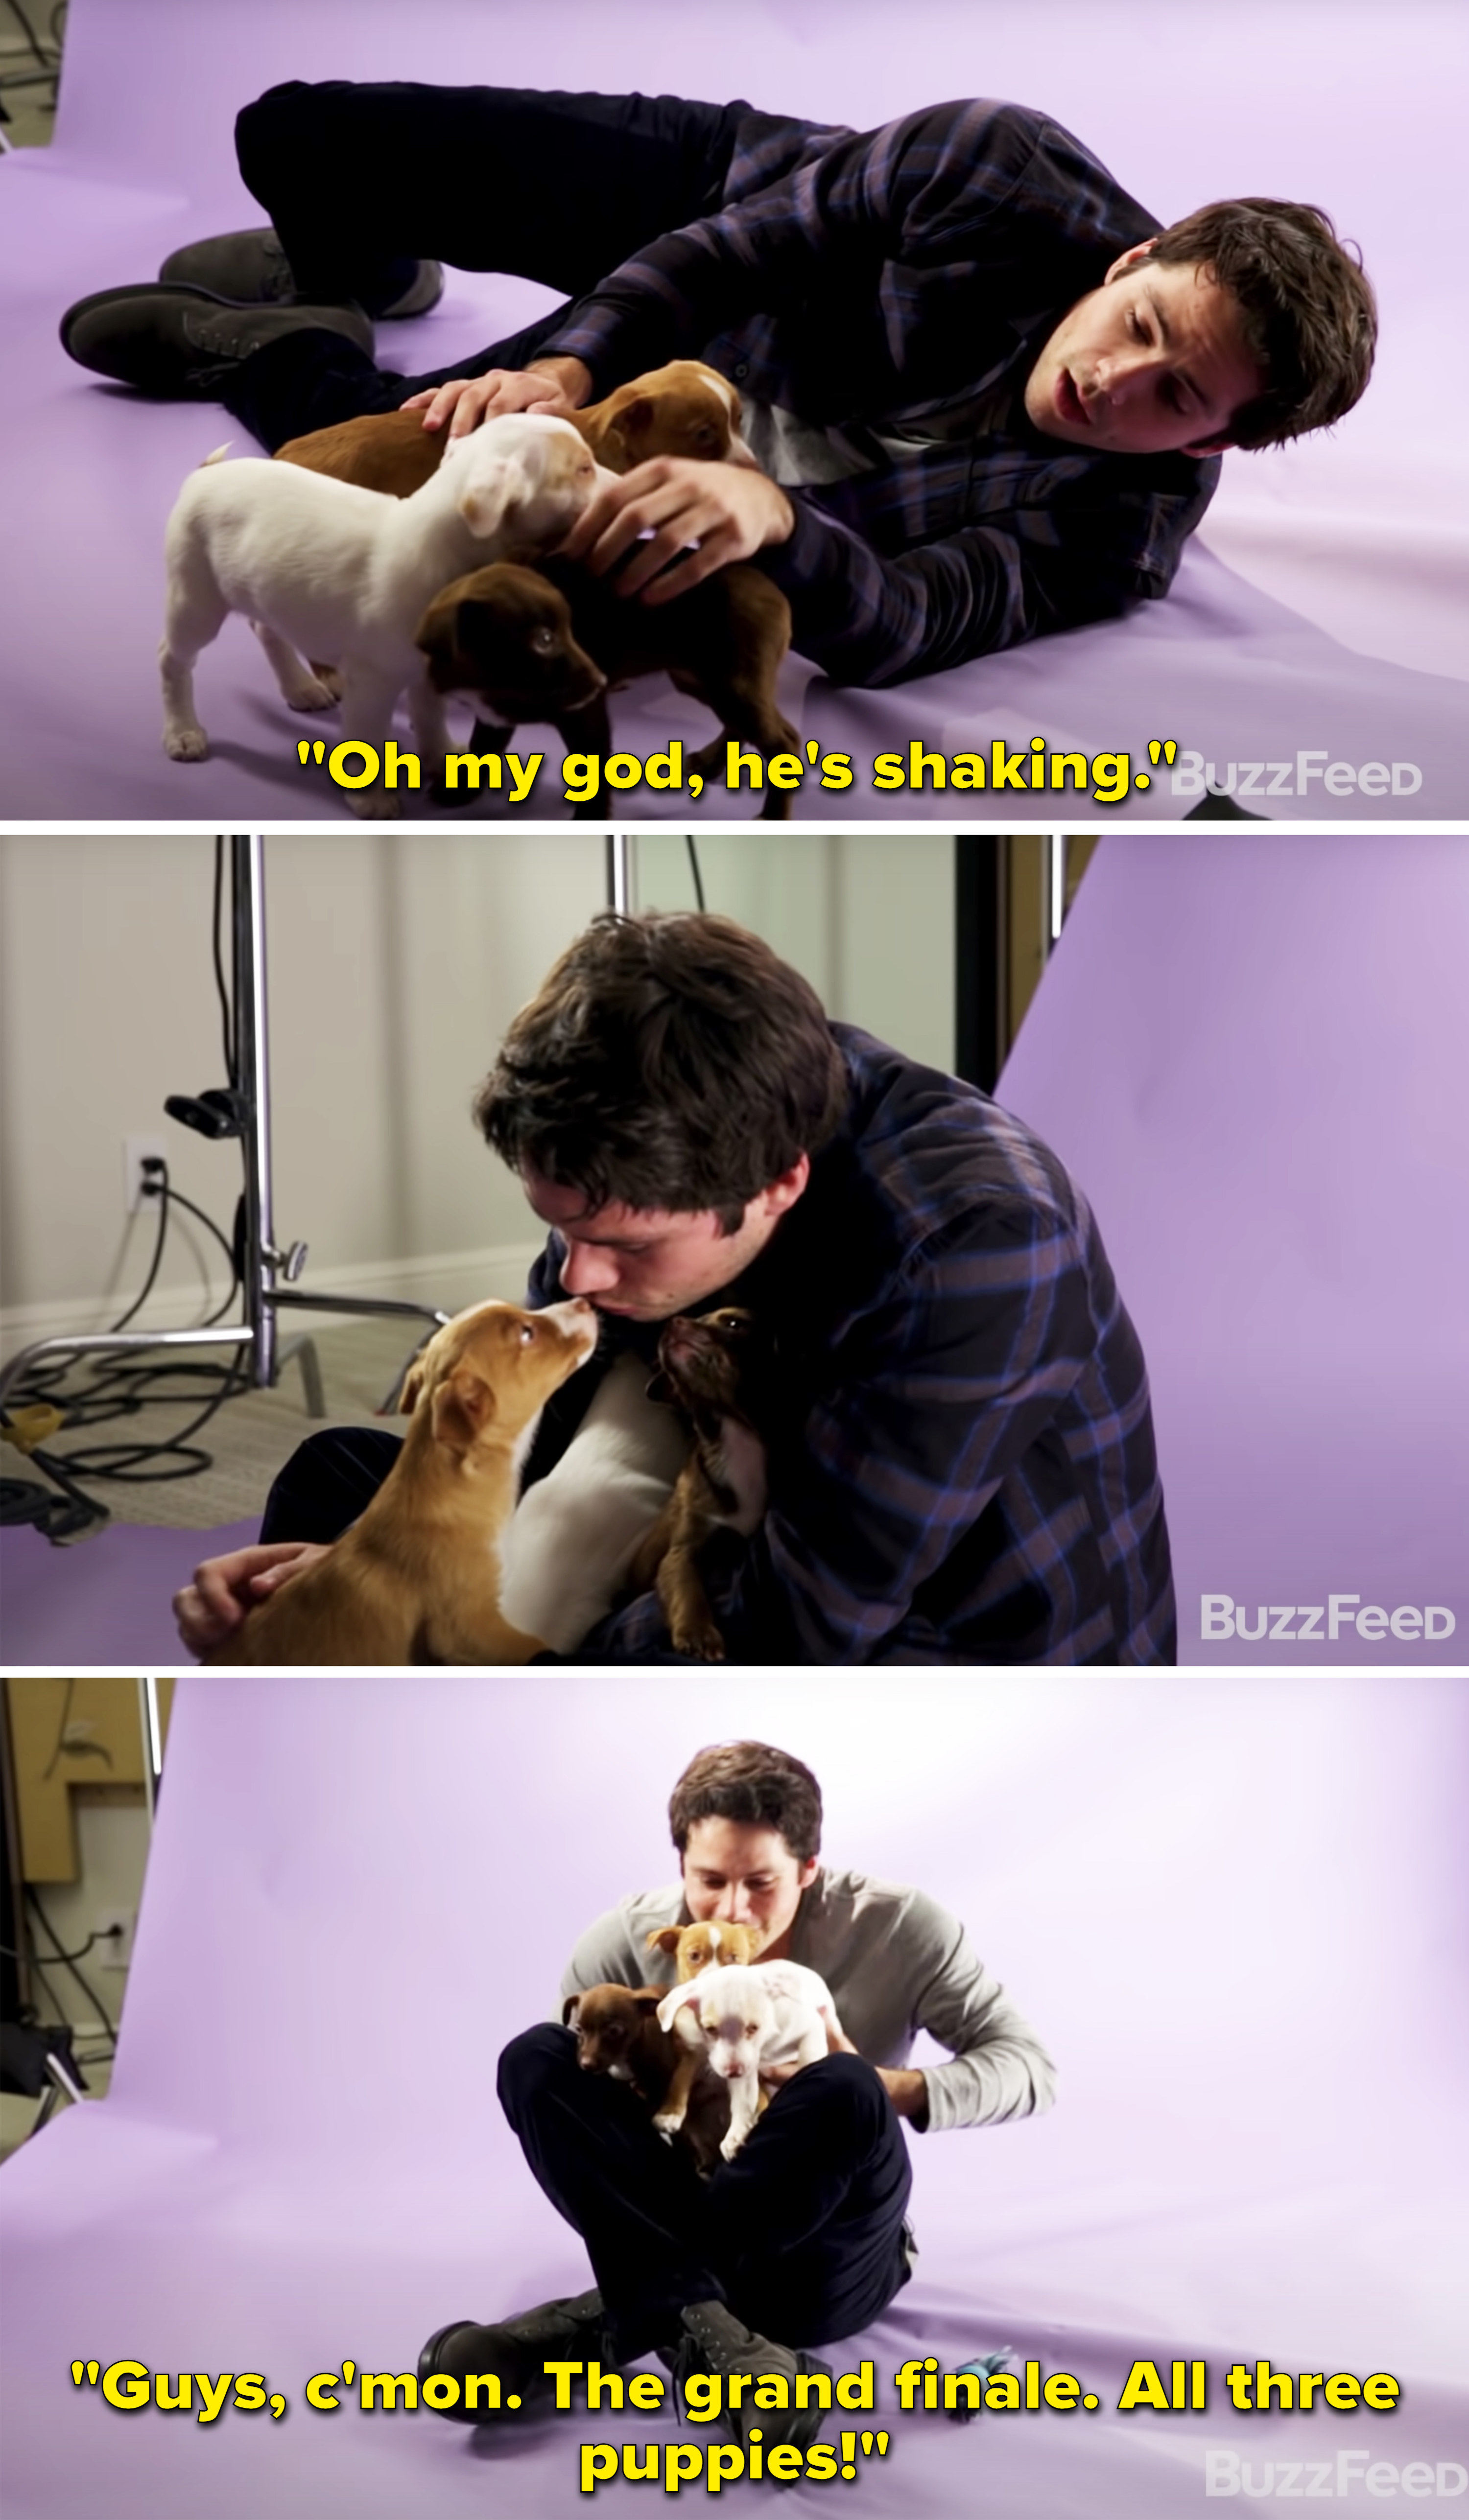 Dylan cuddling puppies